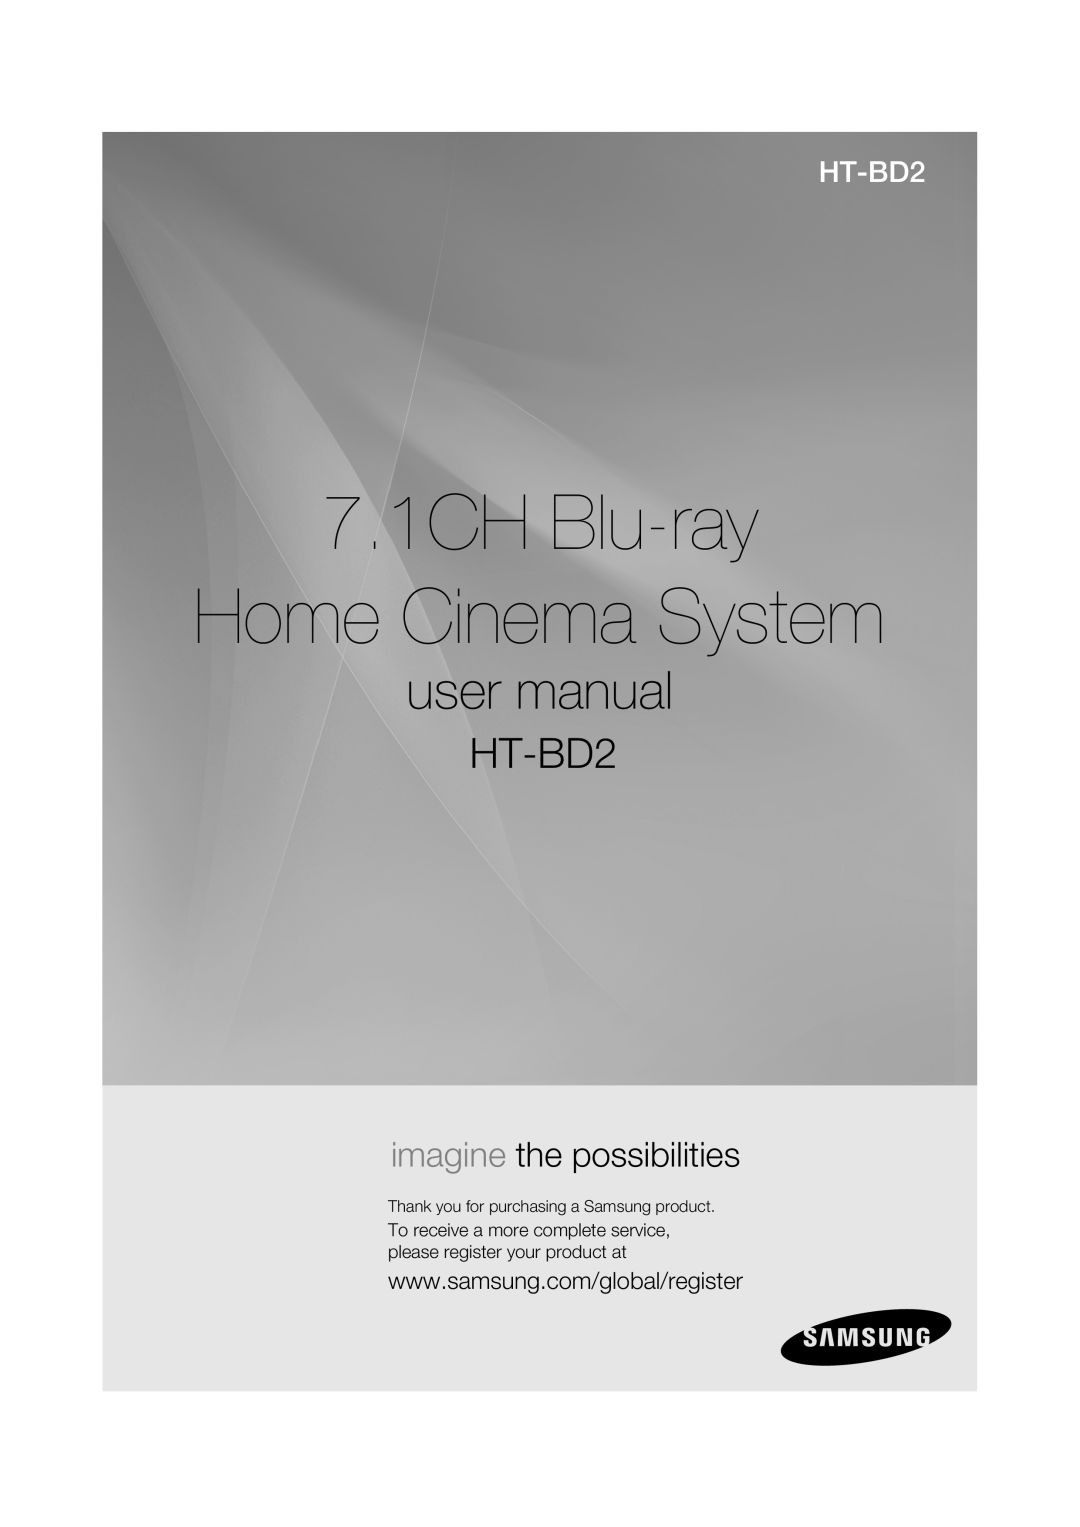 Samsung AH68-02019K 7.1CH Blu-ray Home Cinema System, user manual, HT-BD2, imagine the possibilities 